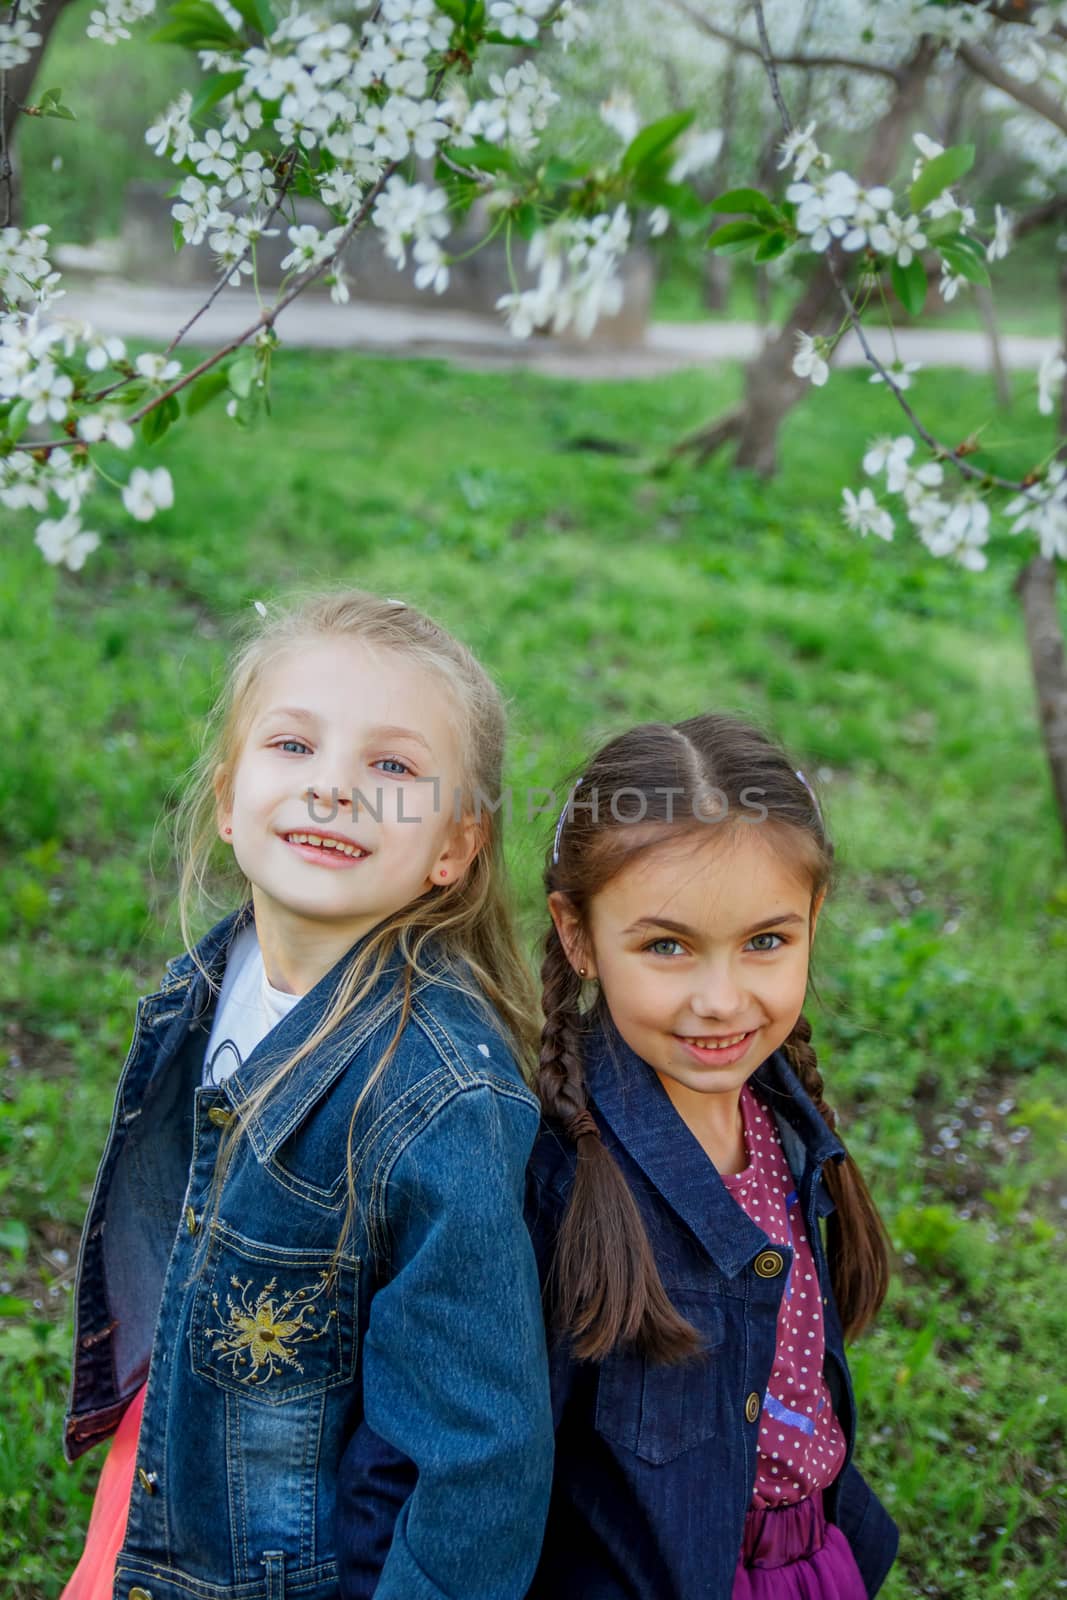 Two girls enjoying falling petals in spring garden by Angel_a